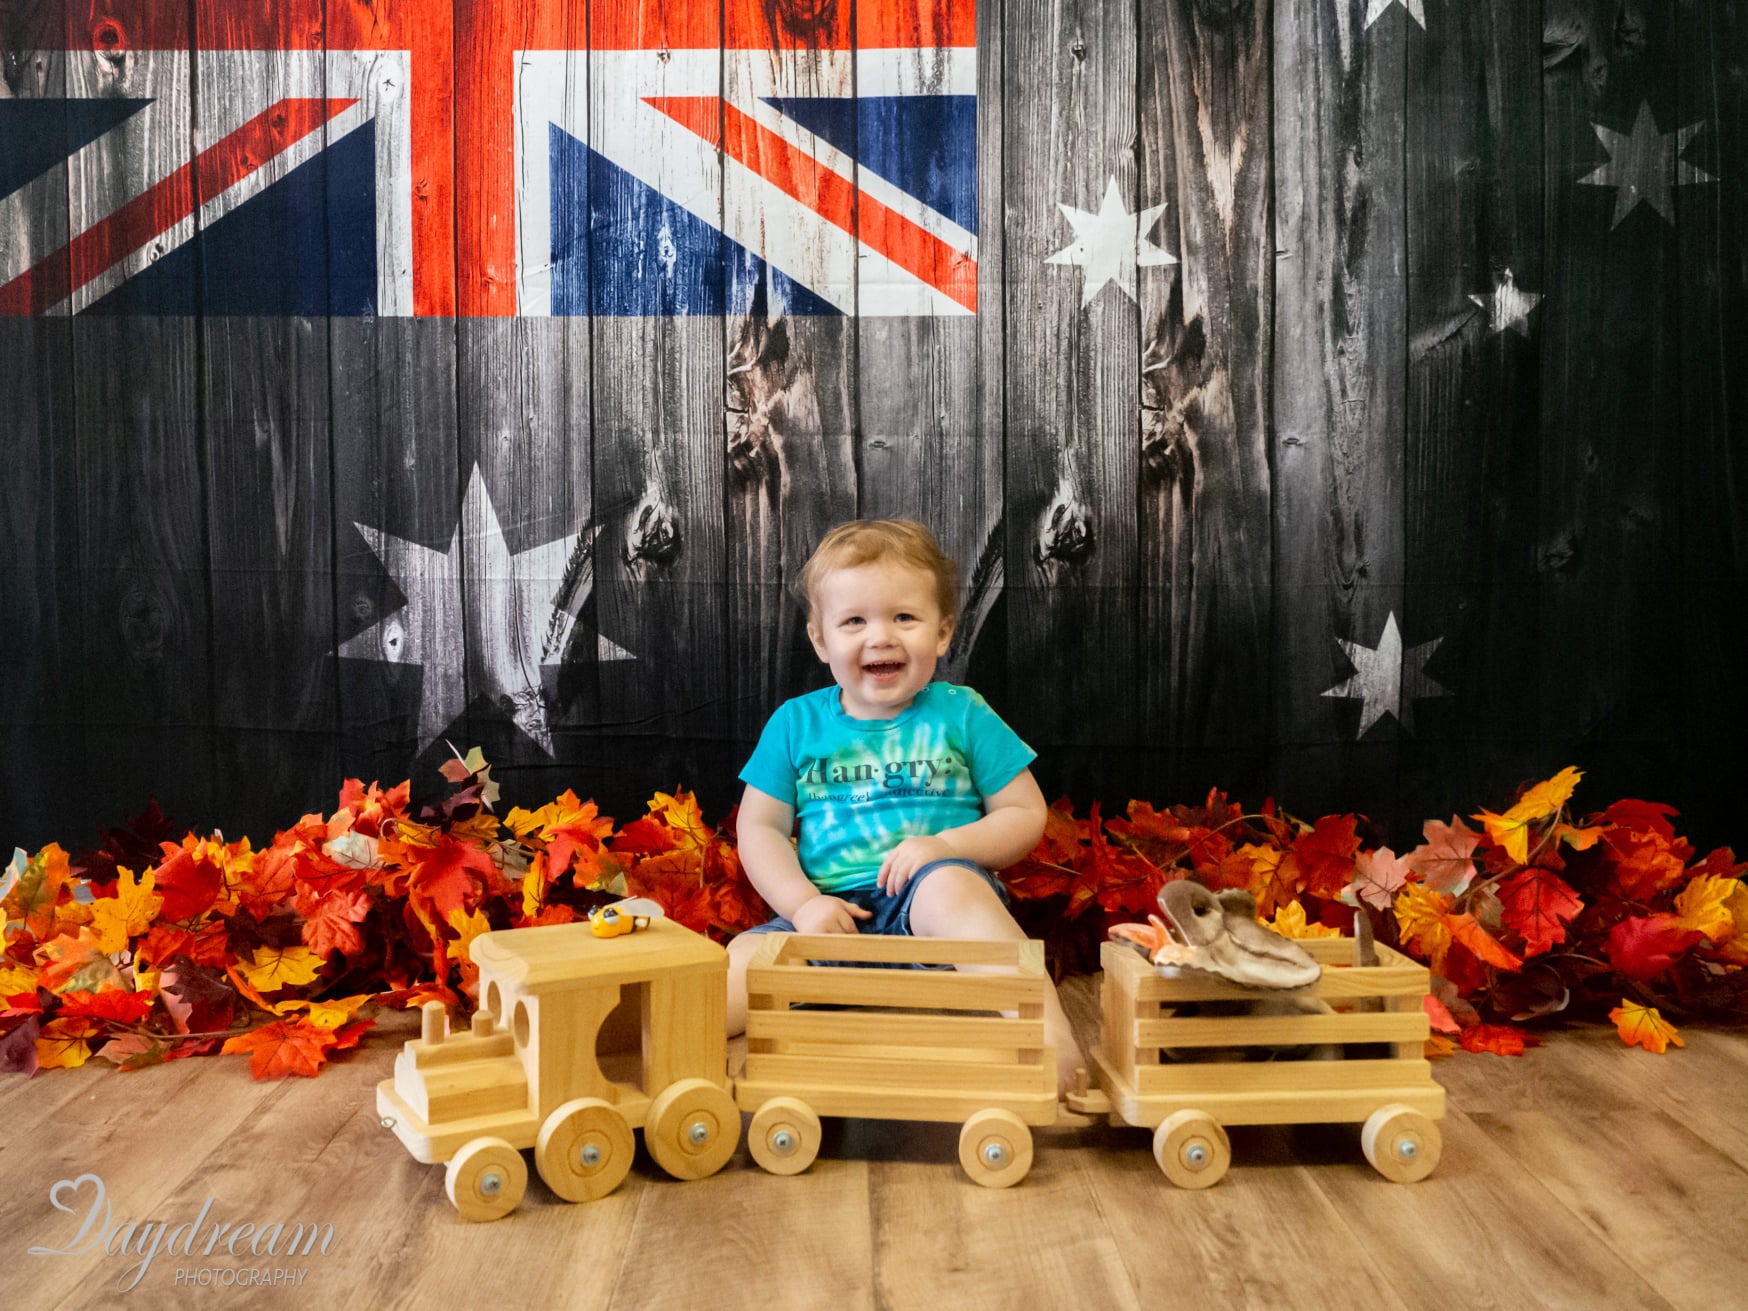 Kate Australian Flag Wooden Backdrop for Photography